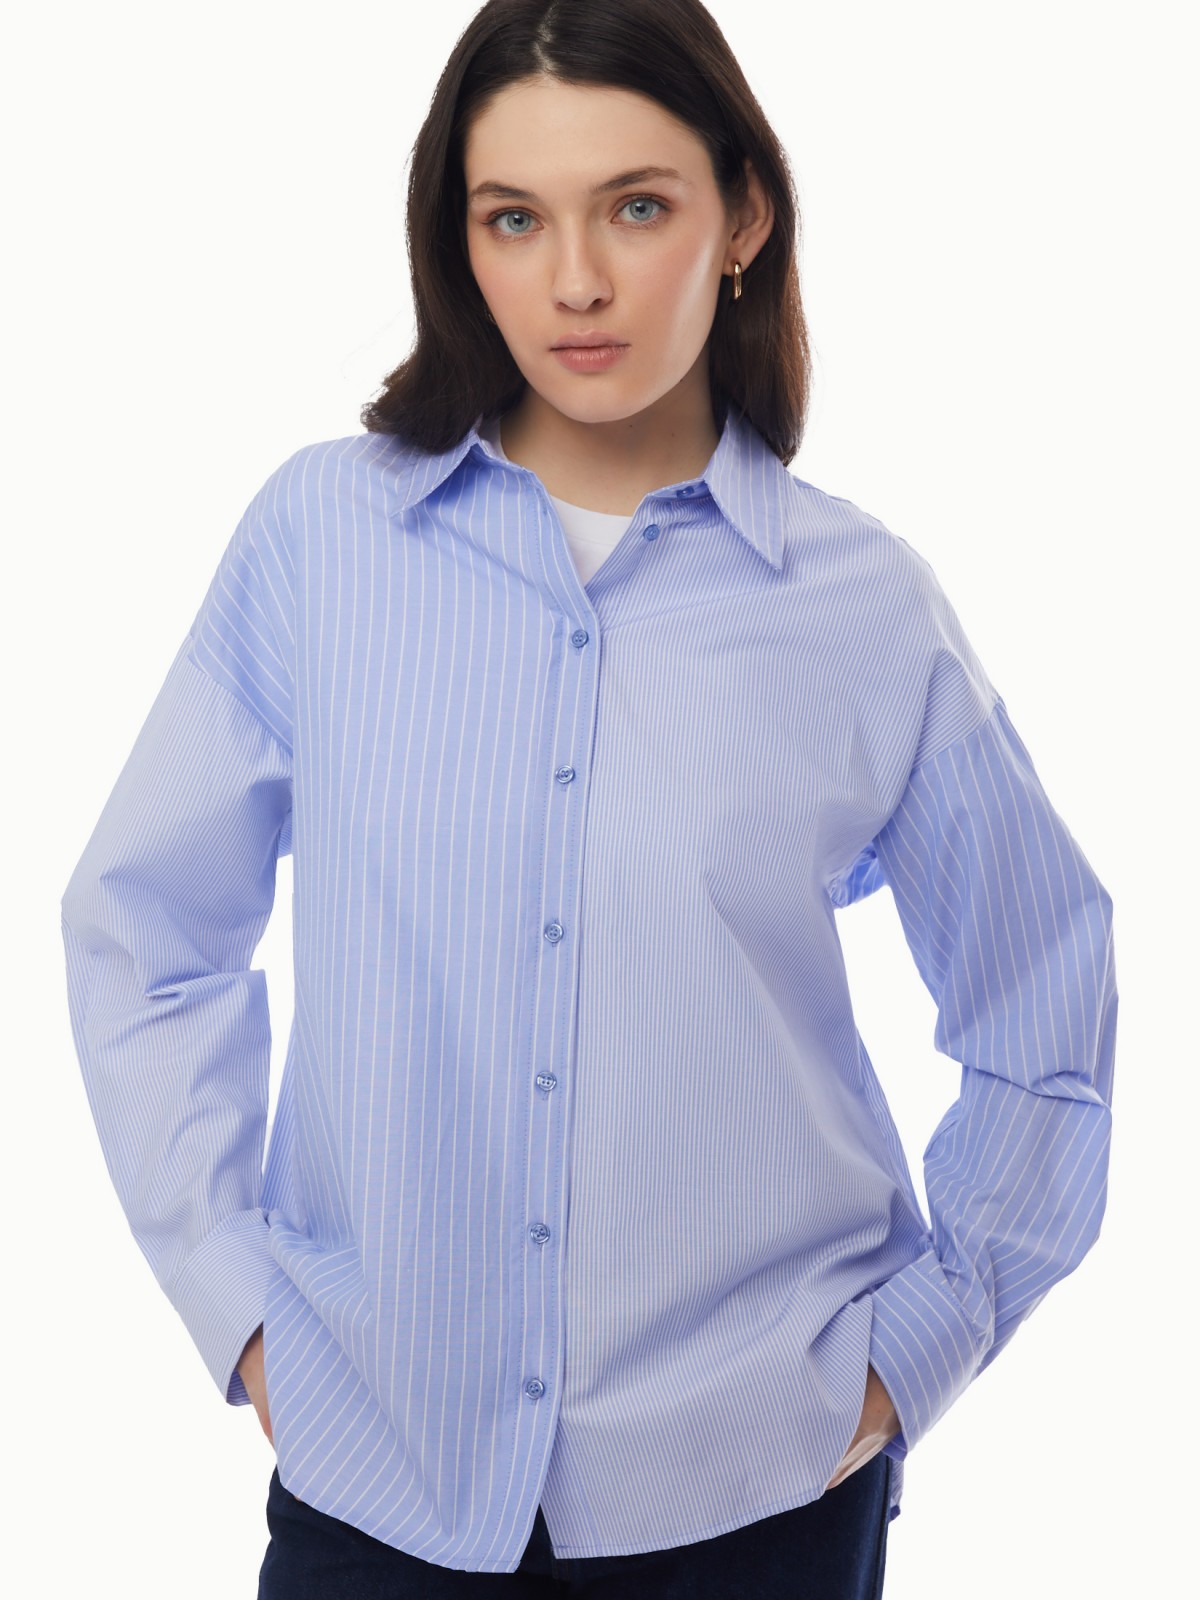 Рубашка оверсайз силуэта с узором в полоску zolla 024131159342, цвет светло-голубой, размер XS - фото 4